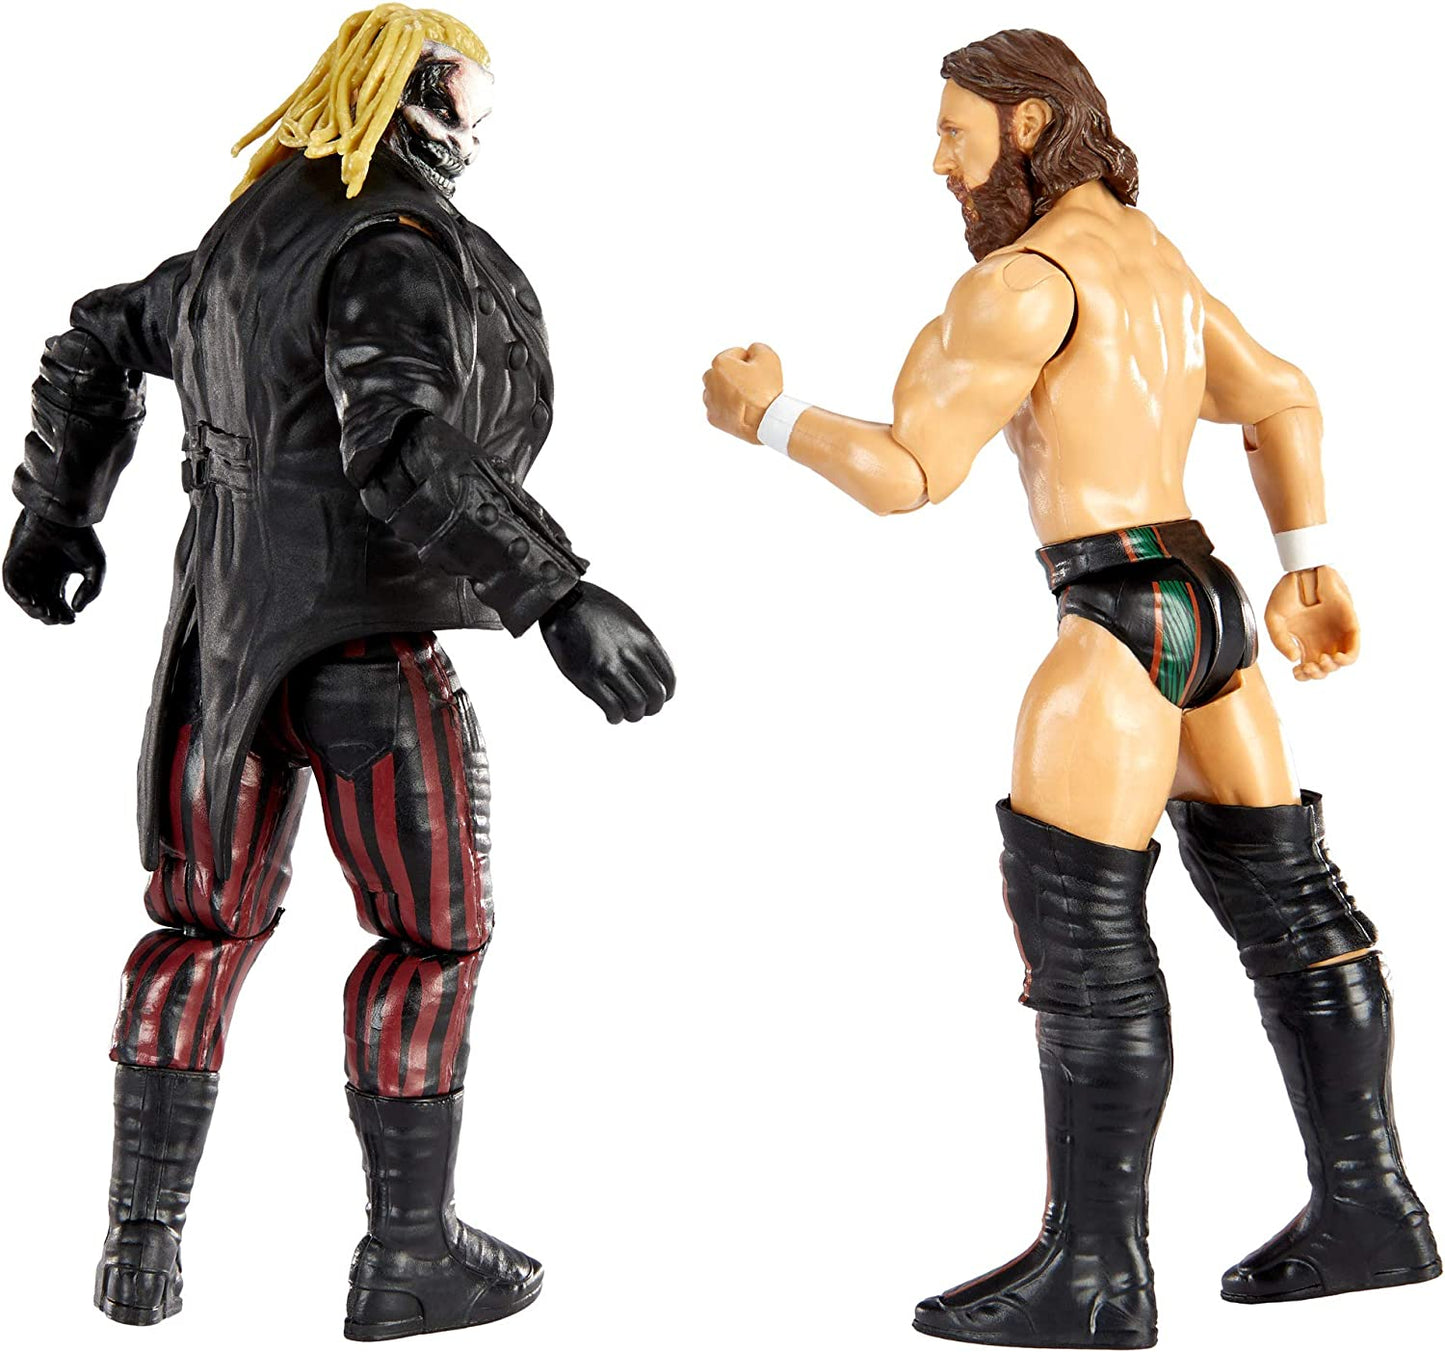  WWE “The Fiend” Bray Wyatt vs Daniel Bryan